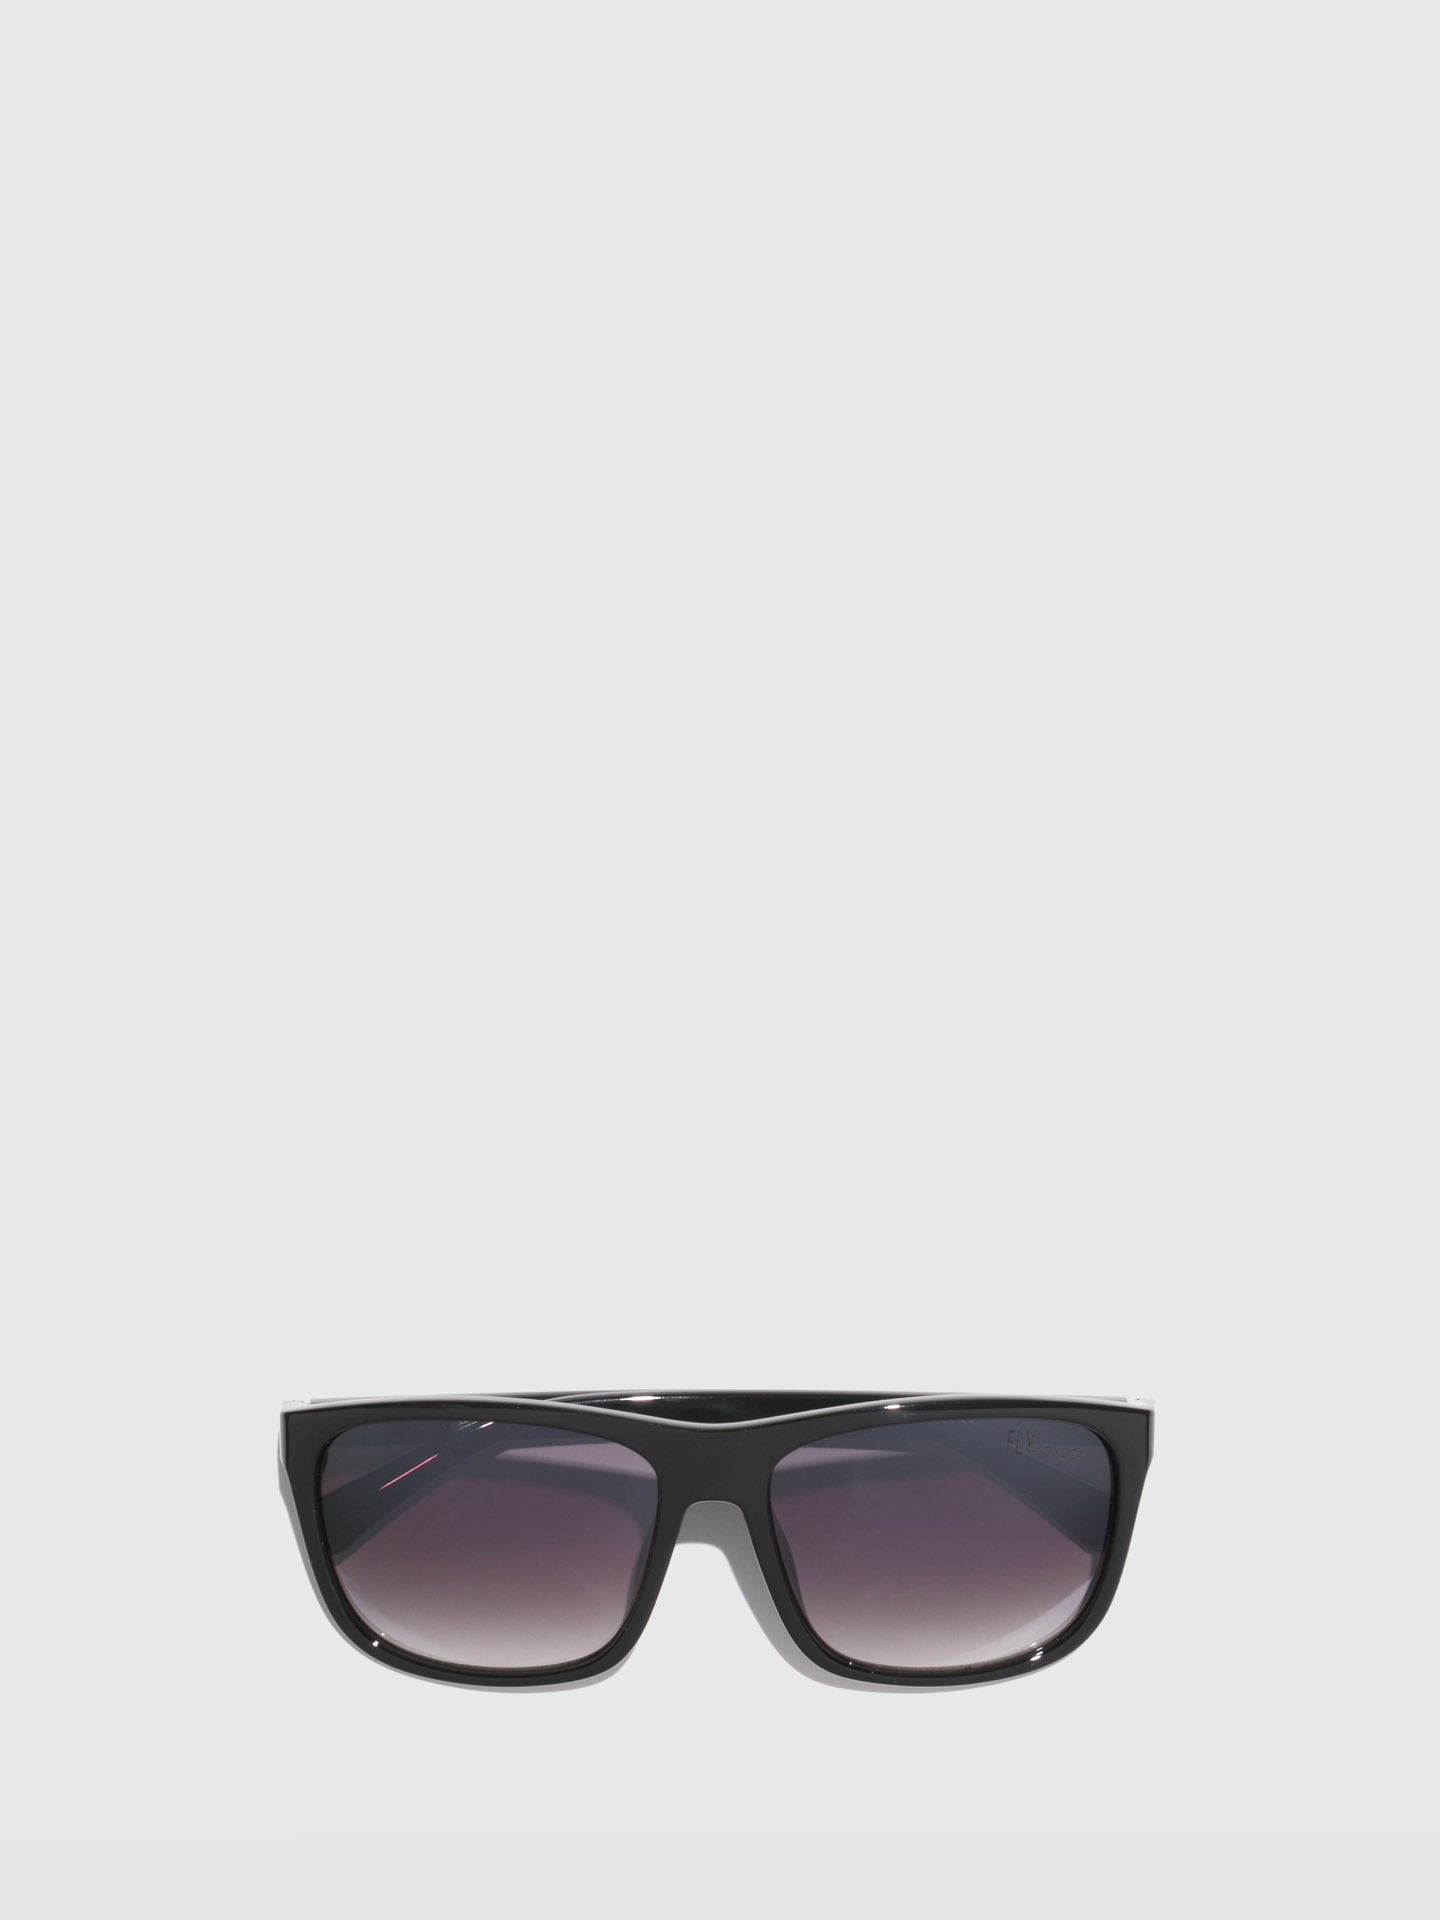 Fly London Black Rectangular Sunglasses